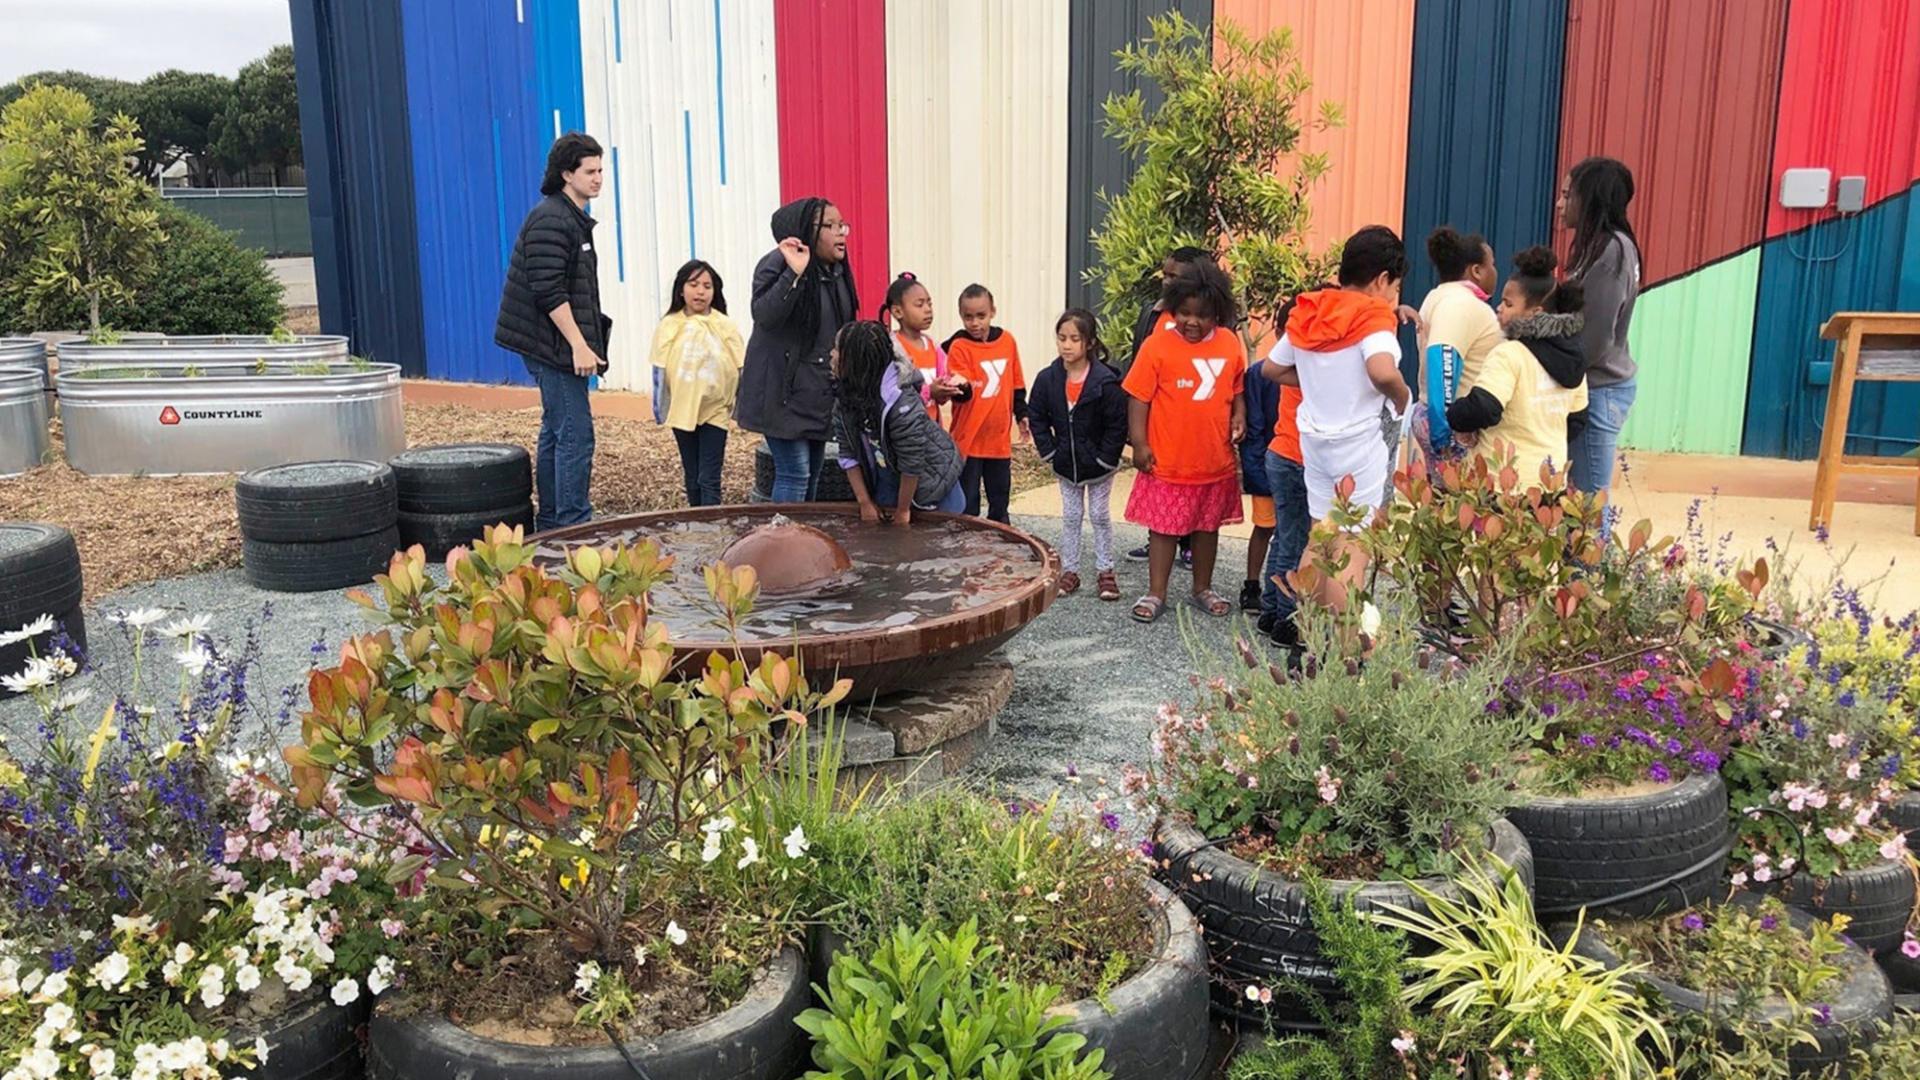 School kids in Gather Garden in San Francisco.